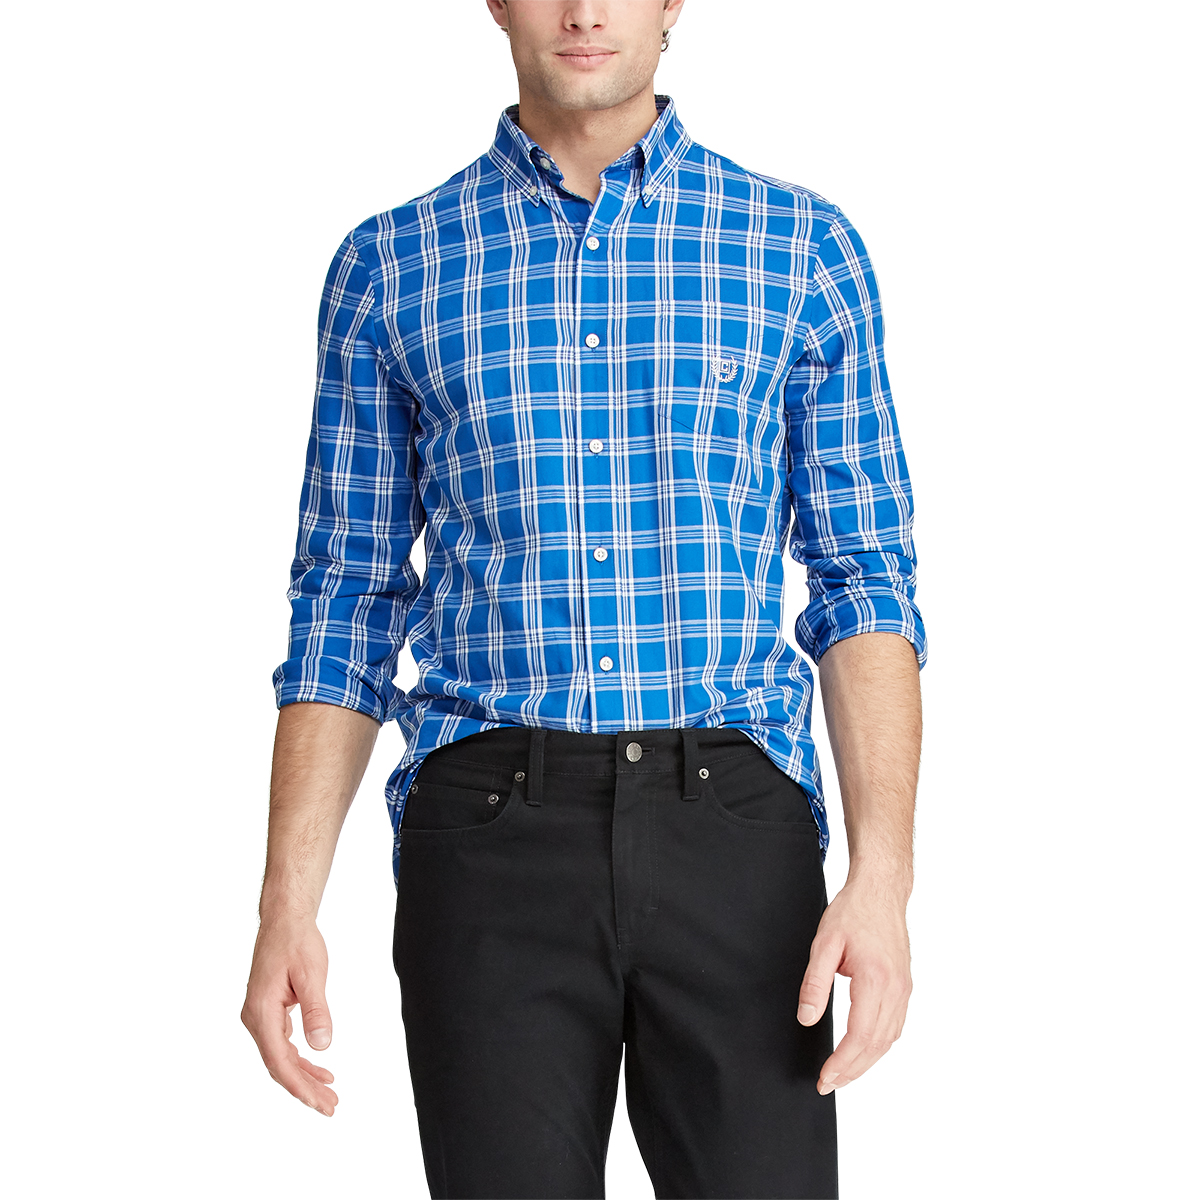 Chaps Men's Long-Sleeve Button Down Shirt - Blue, XL